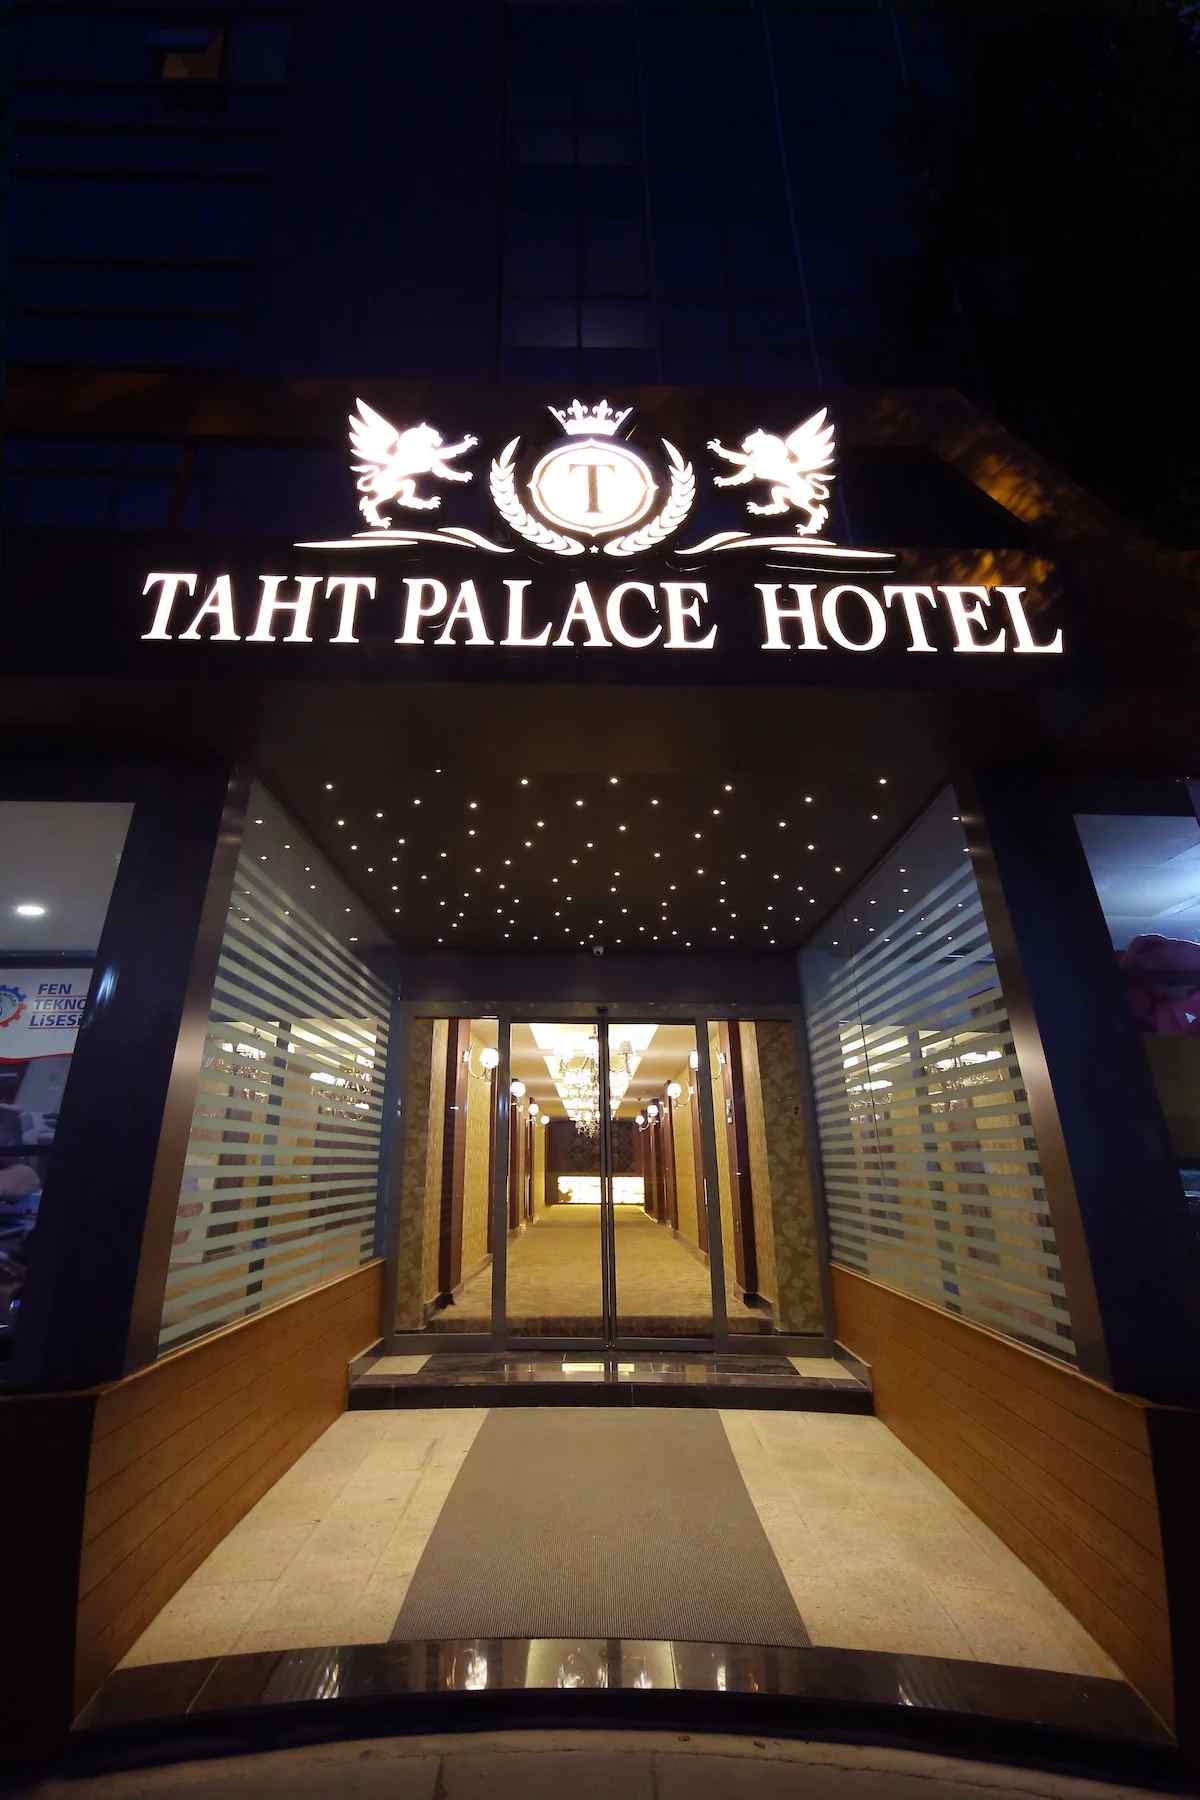 هتل تحت پالاس Taht Palace وان